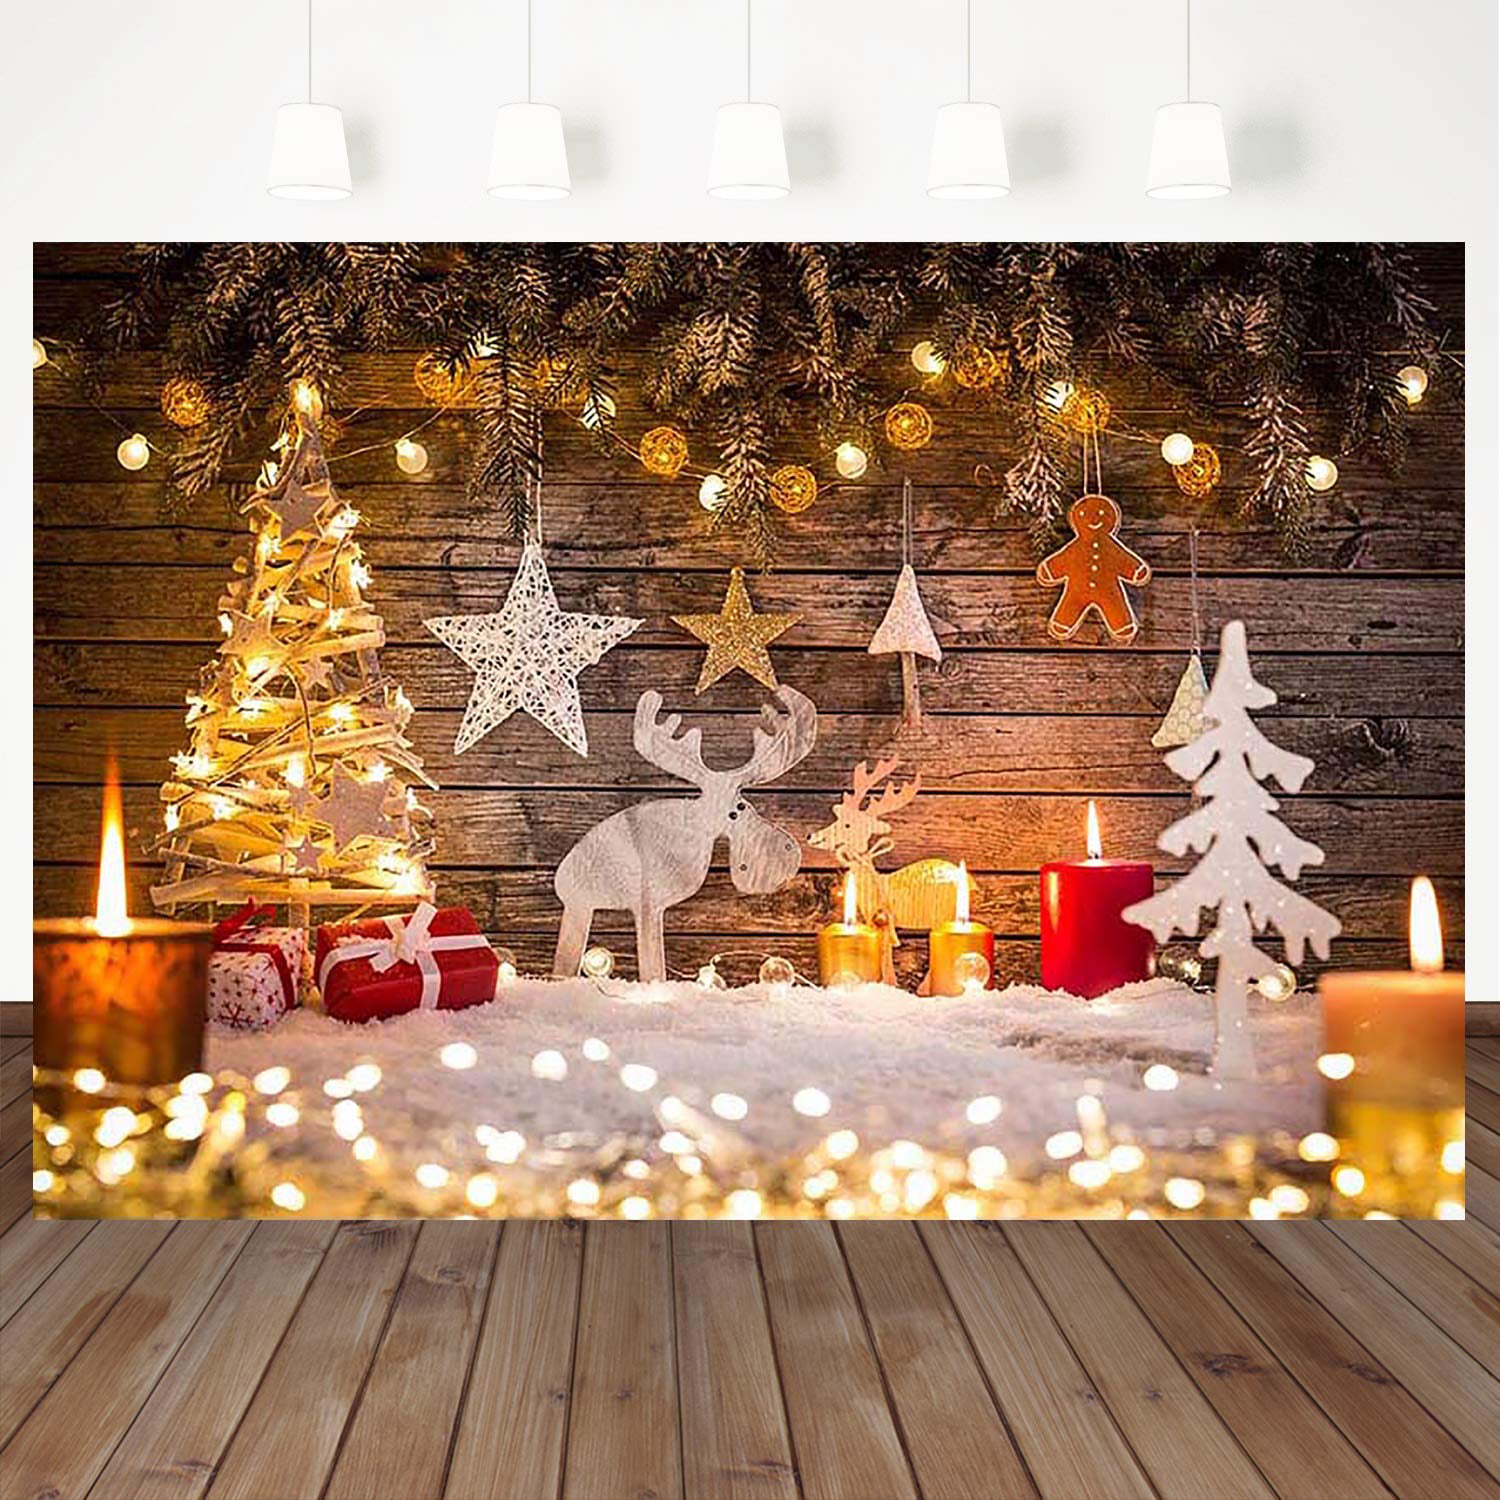 LYWYGG 10x10FT Christmas Background Indoor Christmas Tree Backdrop Wood Floor 